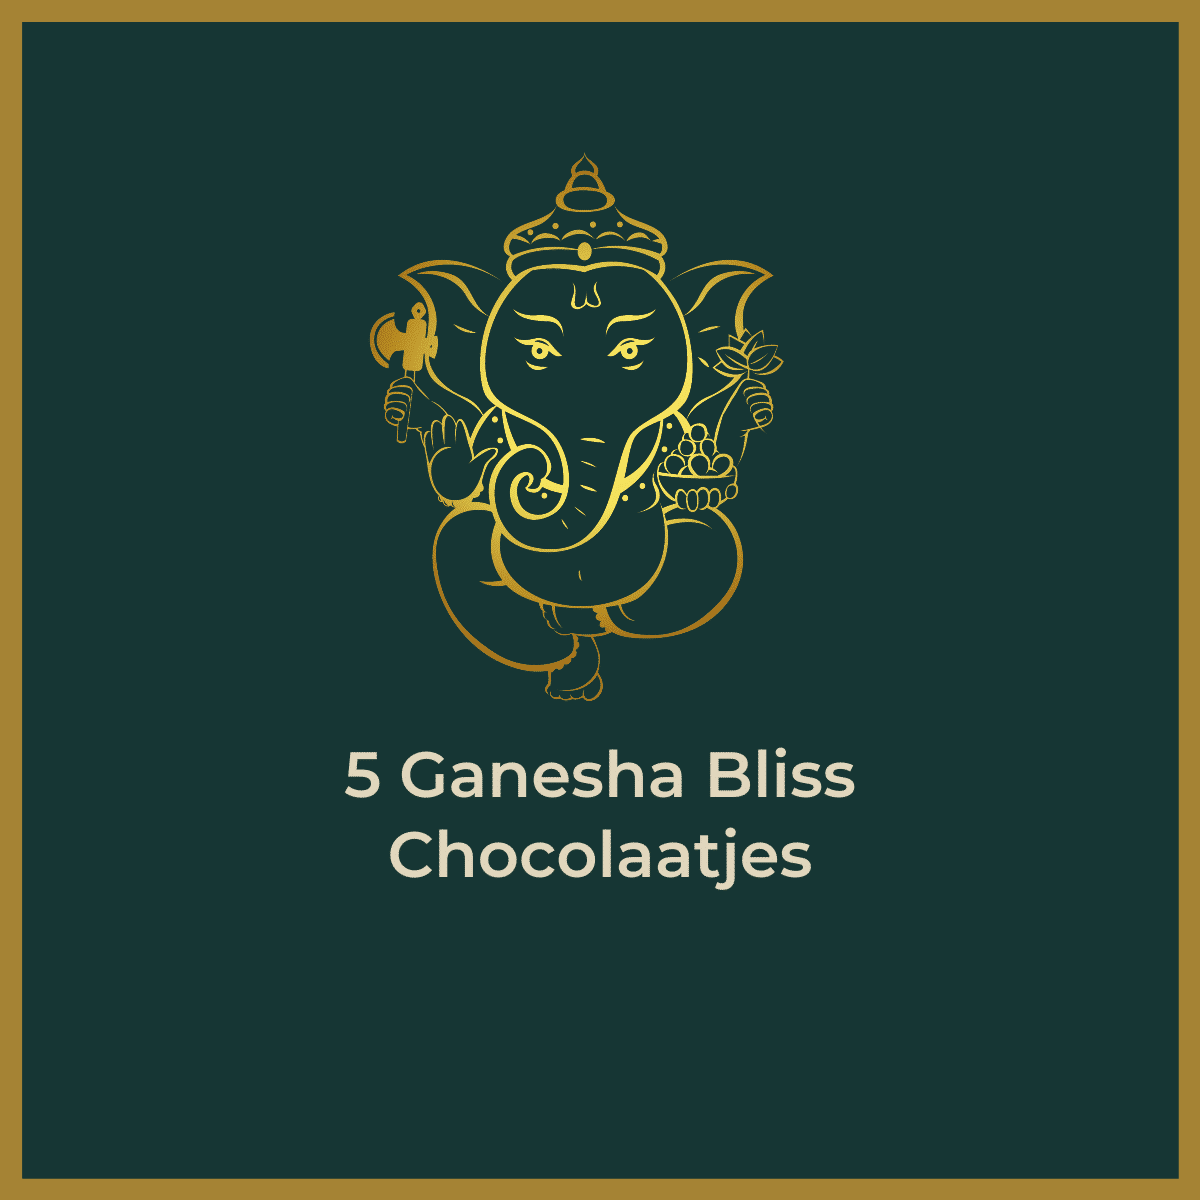 Ganesha-Bliss-Chocolaatjes-5